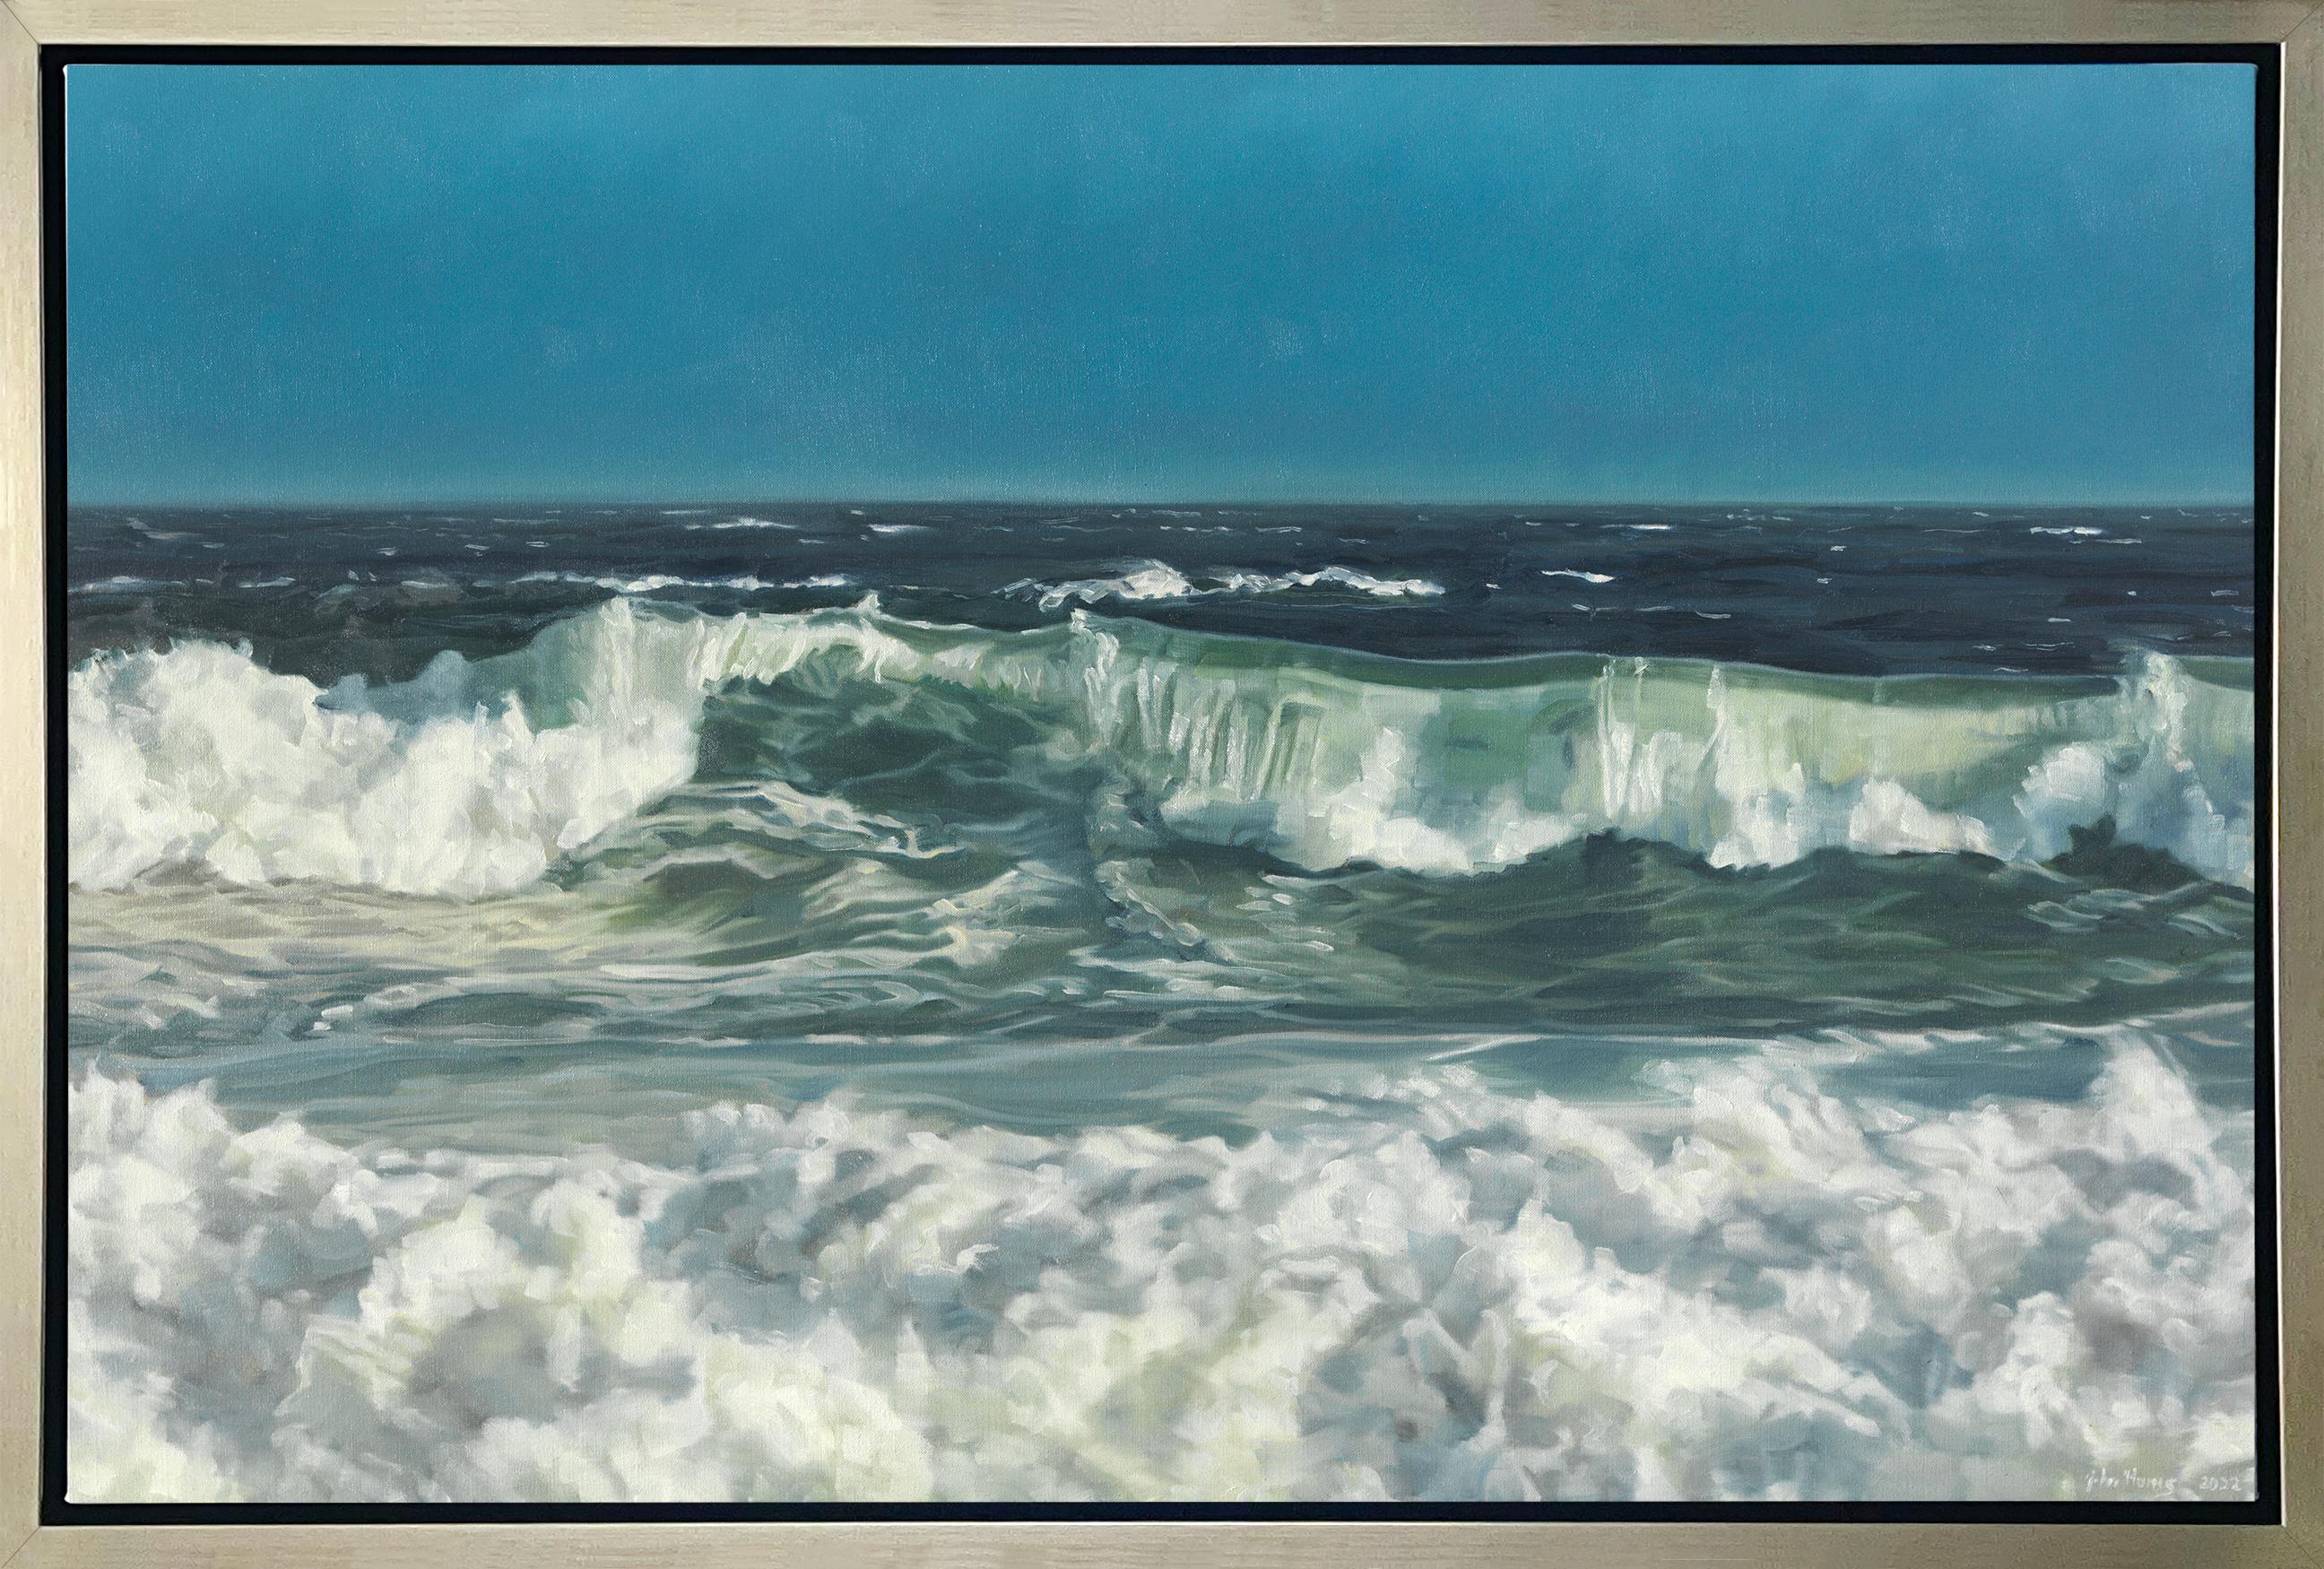 John Harris (painter) Landscape Print - "Curler, " Framed Limited Edition Giclee Print, 30" x 45"